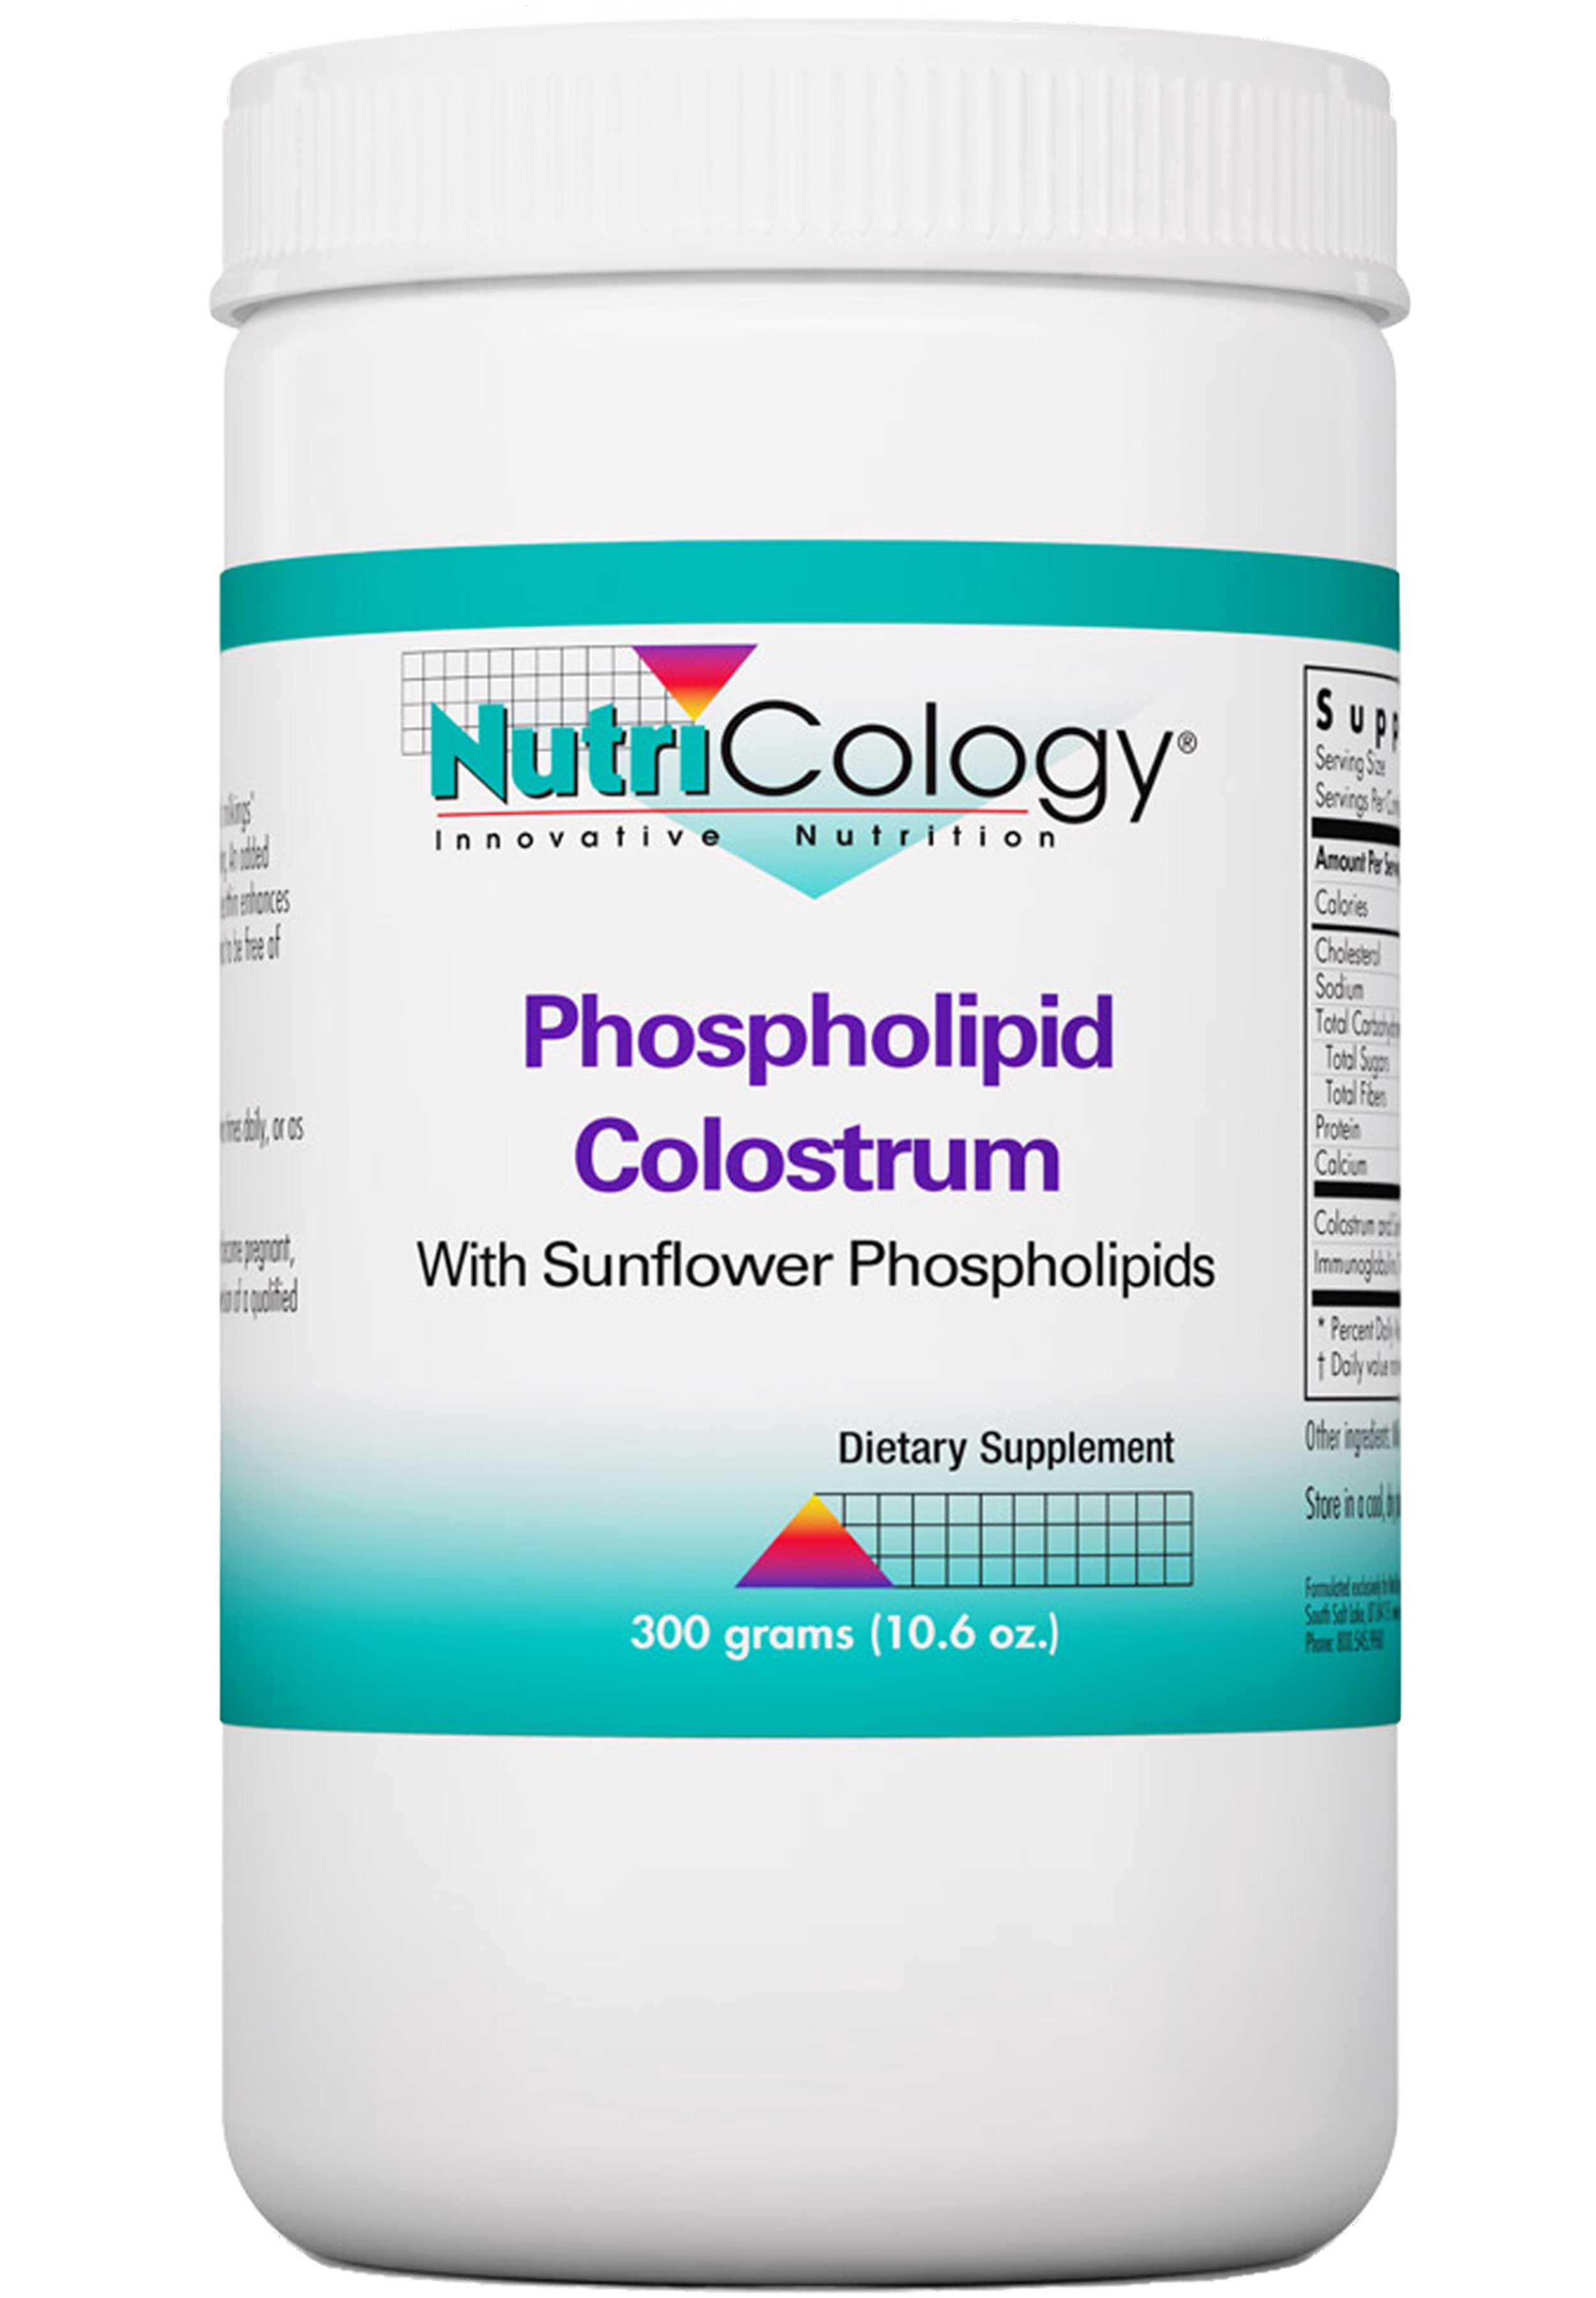 Nutricology Phospholipid Colostrum